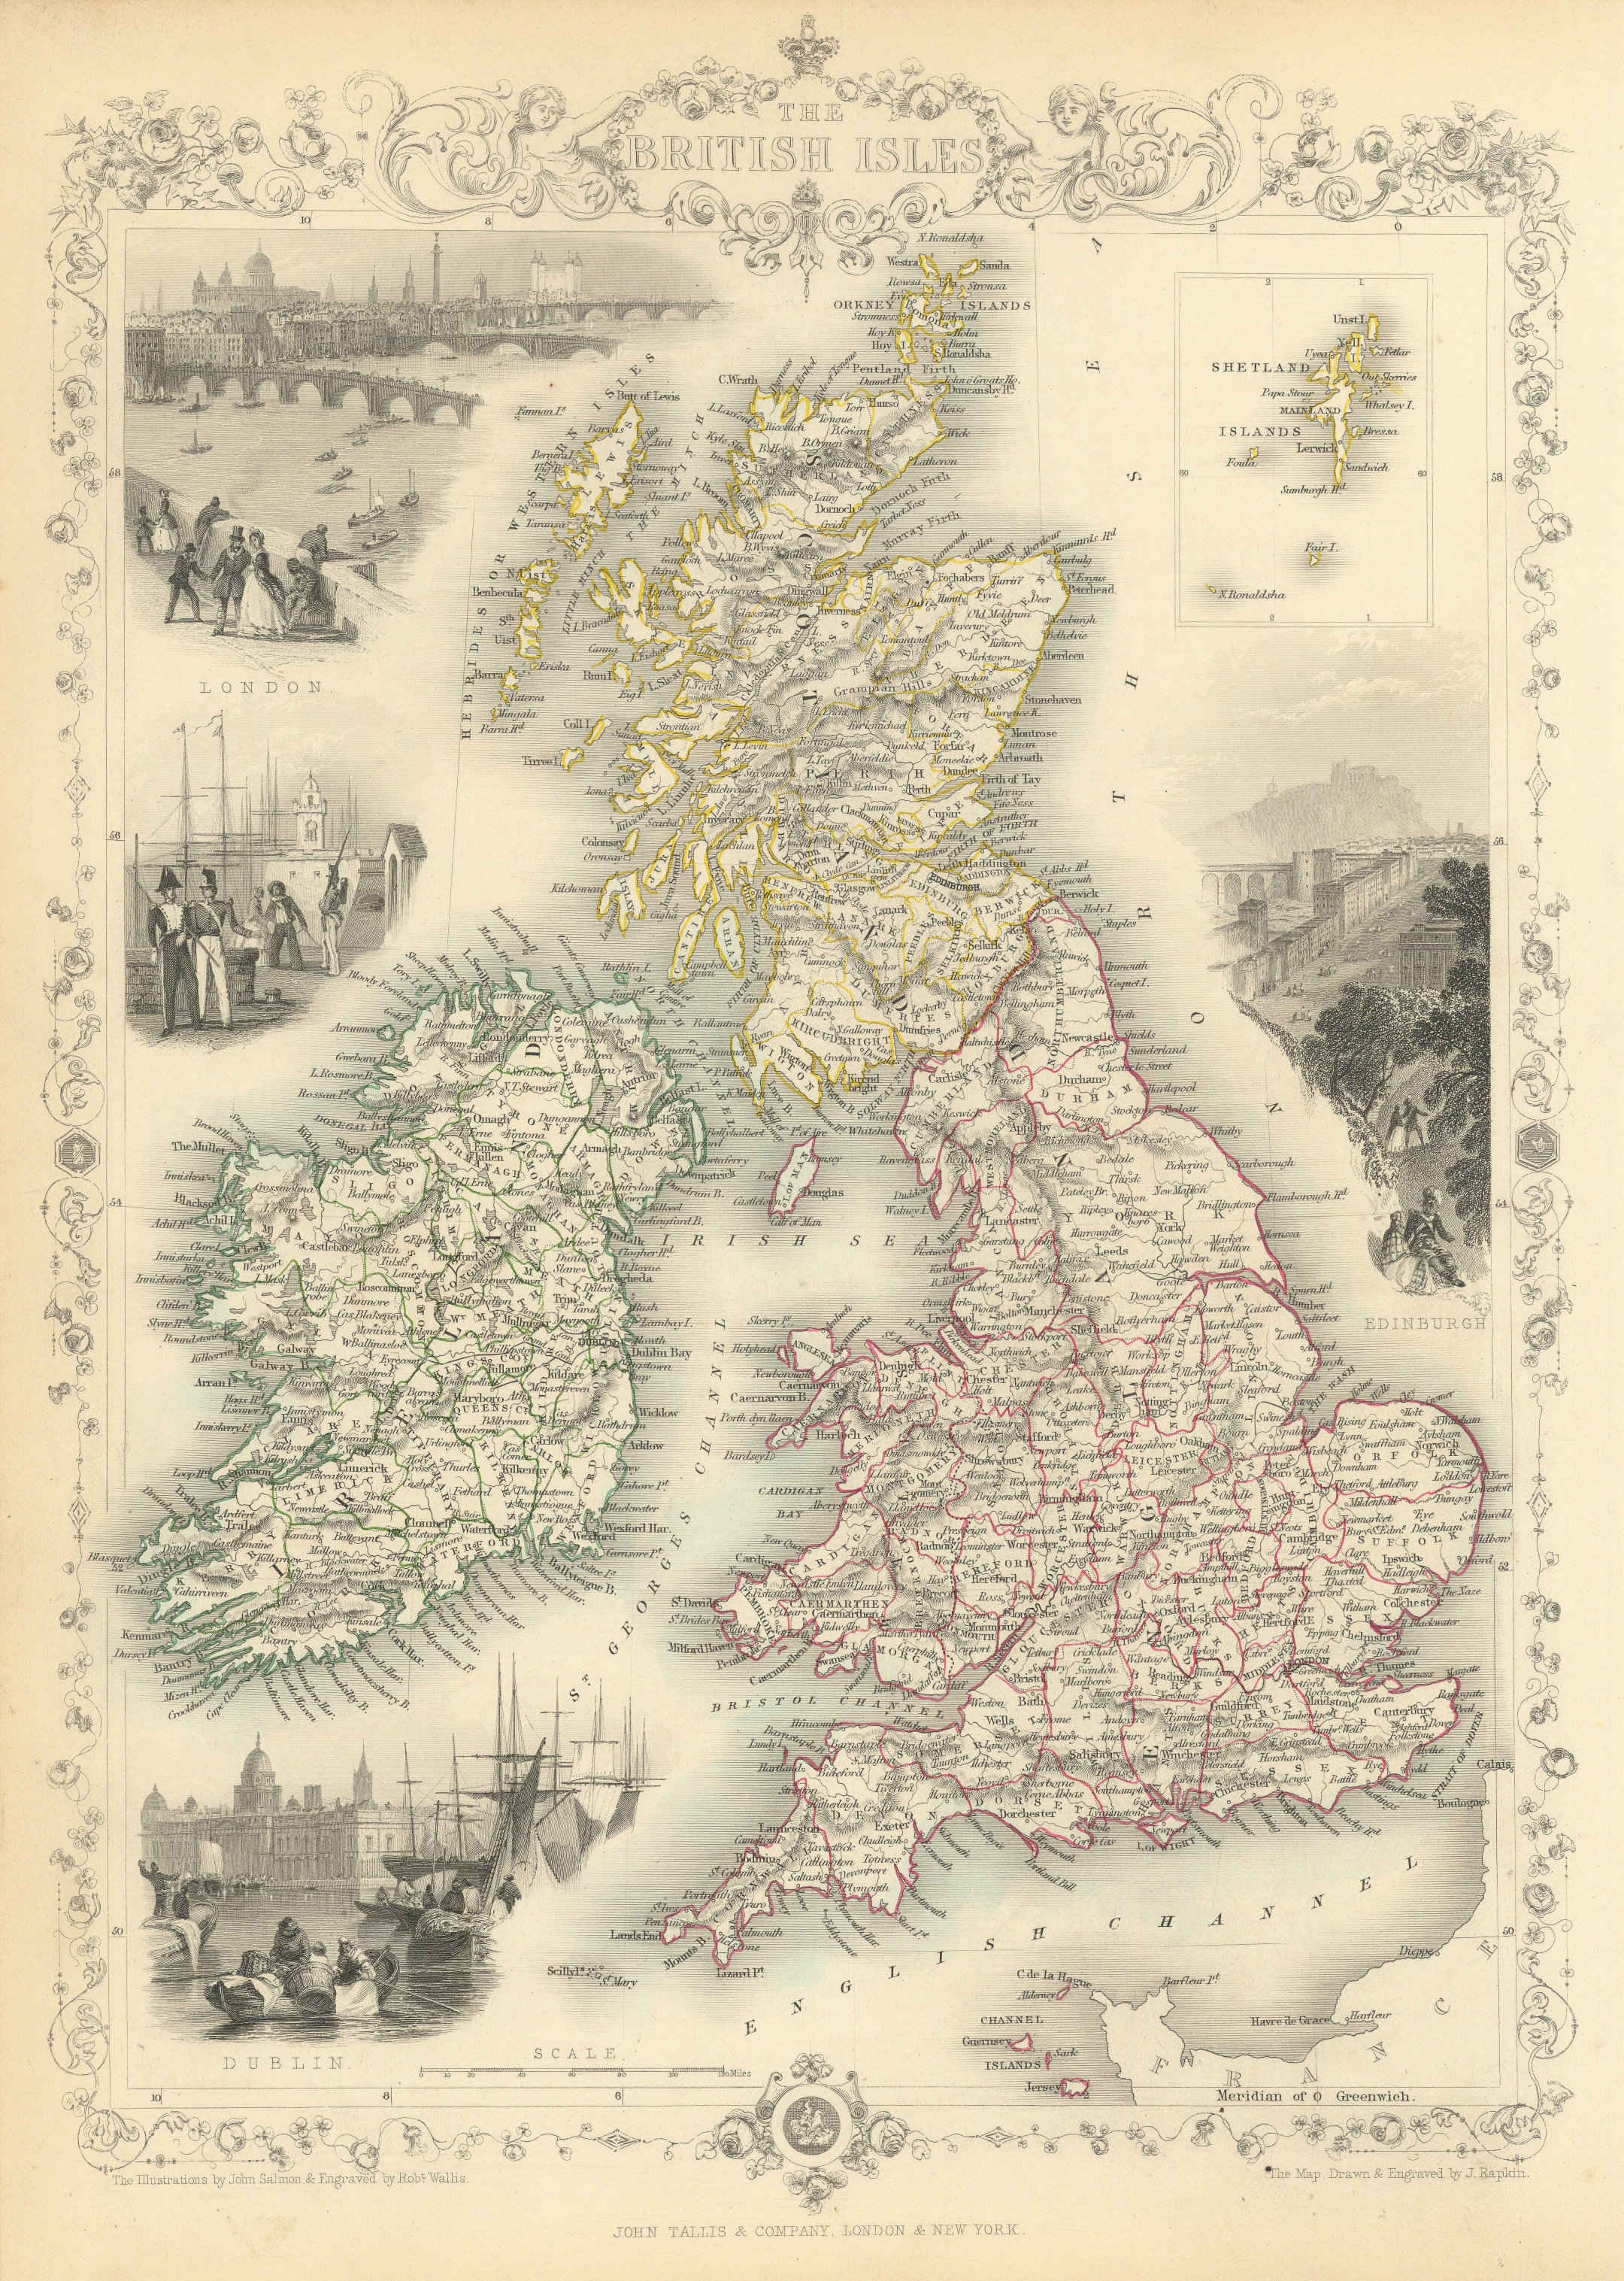 Associate Product BRITISH ISLES. Counties. England Wales Scotland Ireland. TALLIS/RAPKIN 1851 map